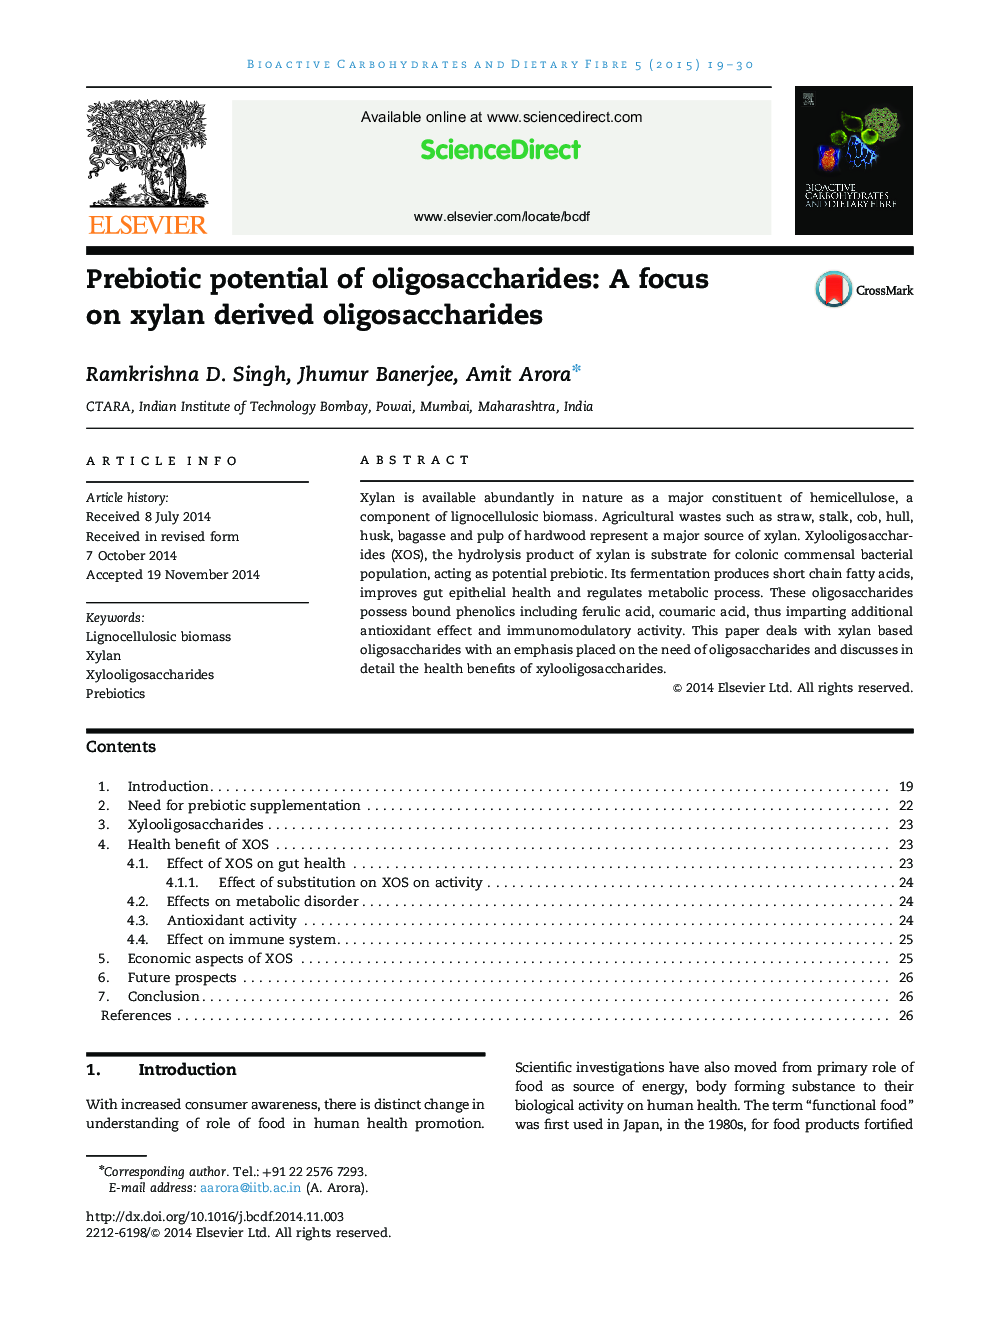 Prebiotic potential of oligosaccharides: A focus on xylan derived oligosaccharides